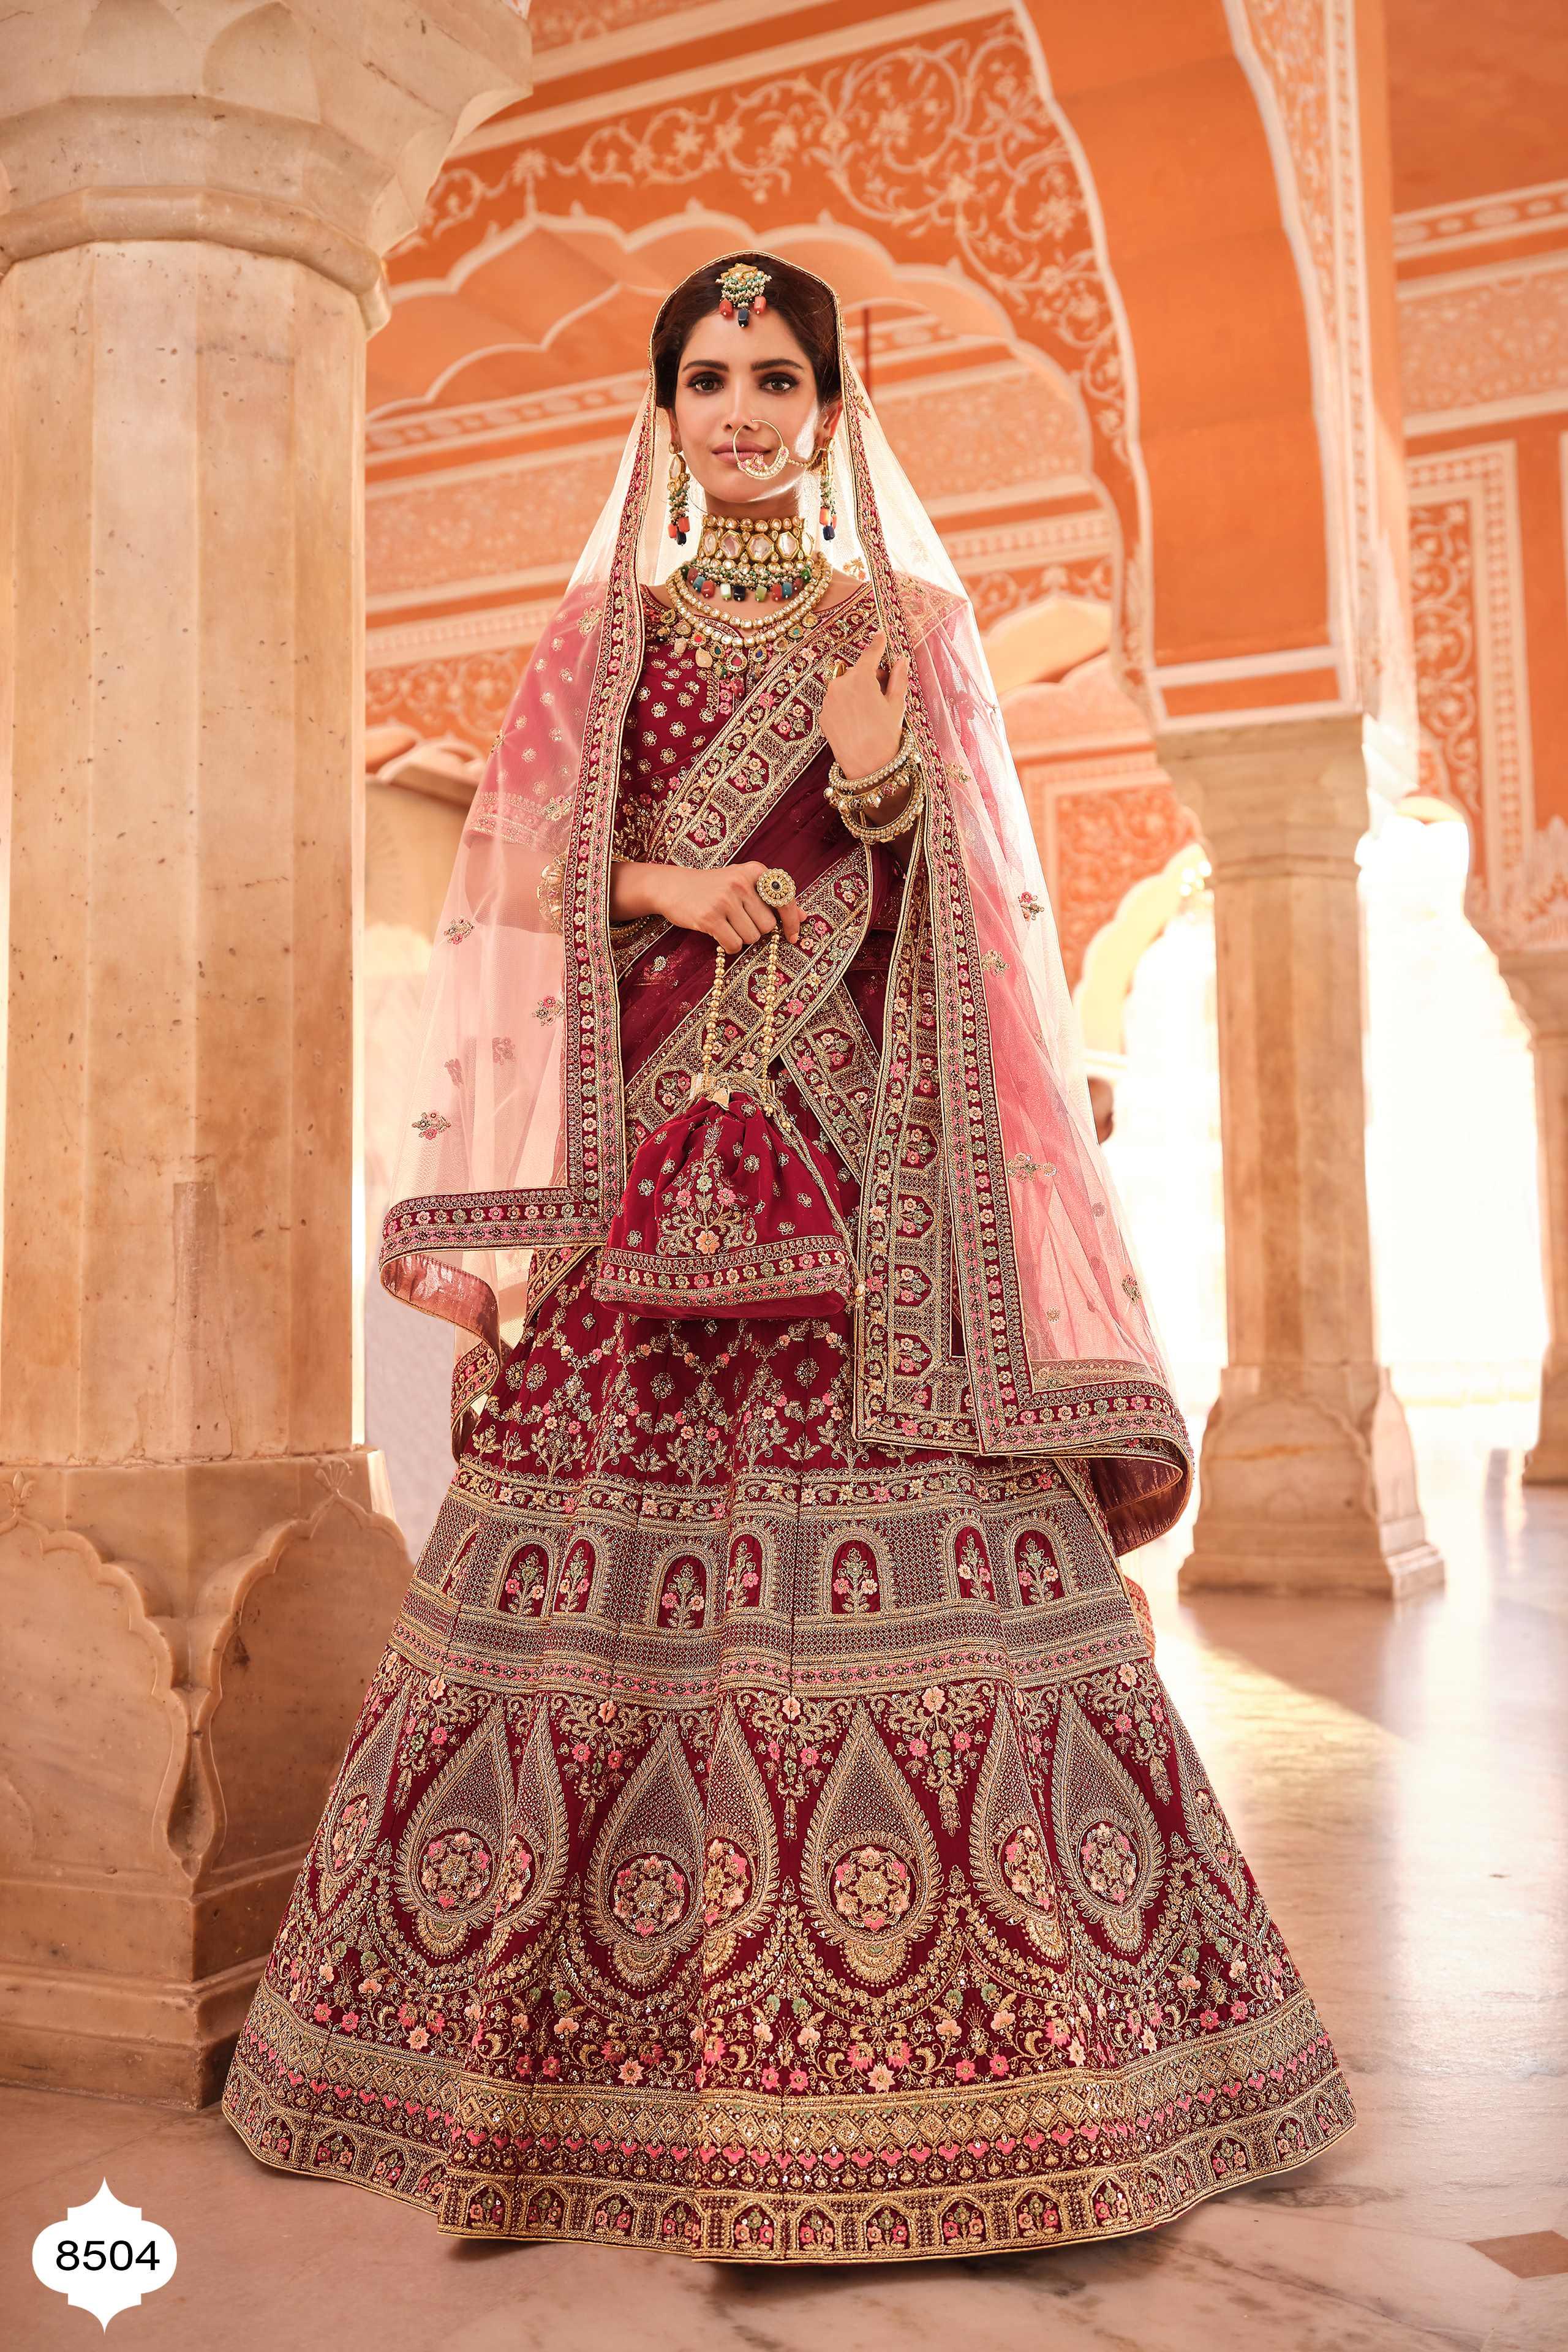 This Bride Wore The Monochrome Red Lehenga Better Than Priyanka Chopra –  WedBook | Indian wedding reception outfits, Couple wedding dress, New  wedding dress indian